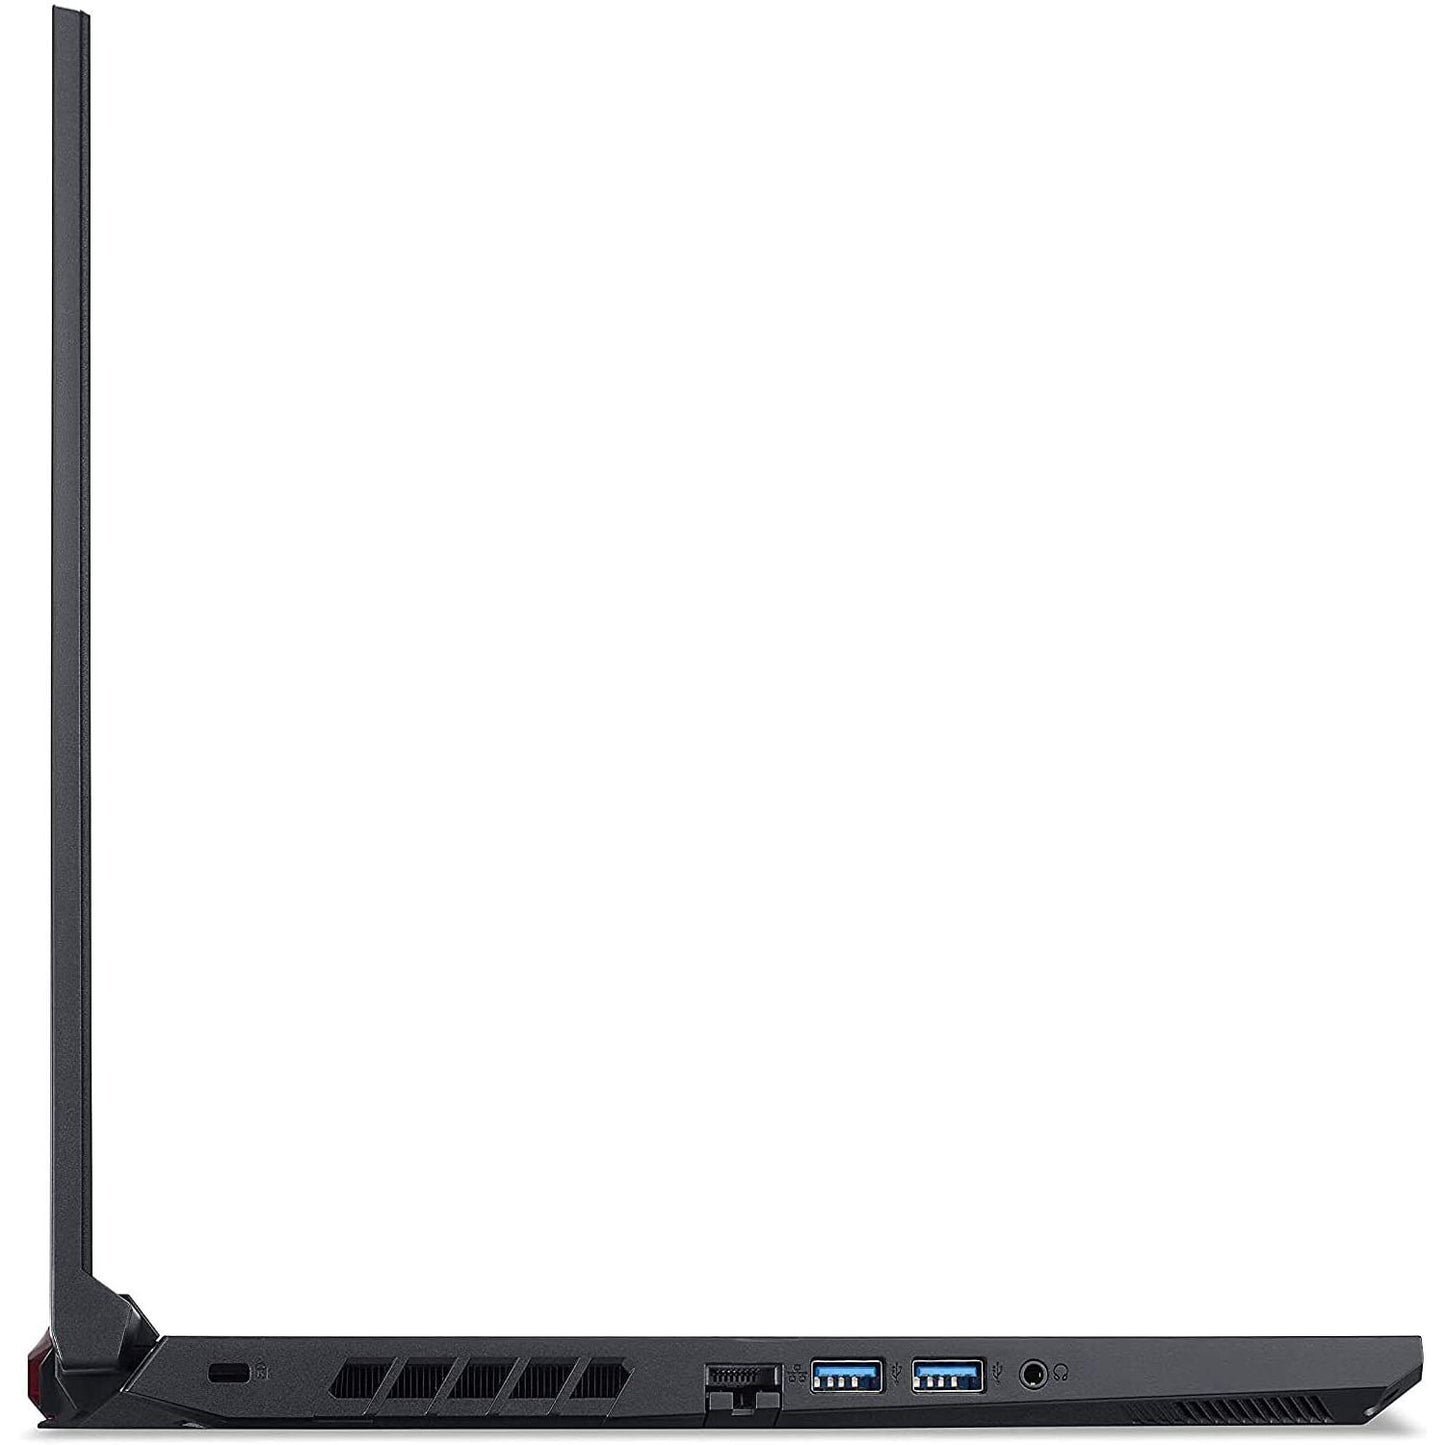 Acer Nitro 5 Gaming Laptop 15.6" FHD Ryzen 5 4600H 3GHz NVIDIA GeForce GTX 1650 4GB 8GB RAM 512GB SSD Win10 Black